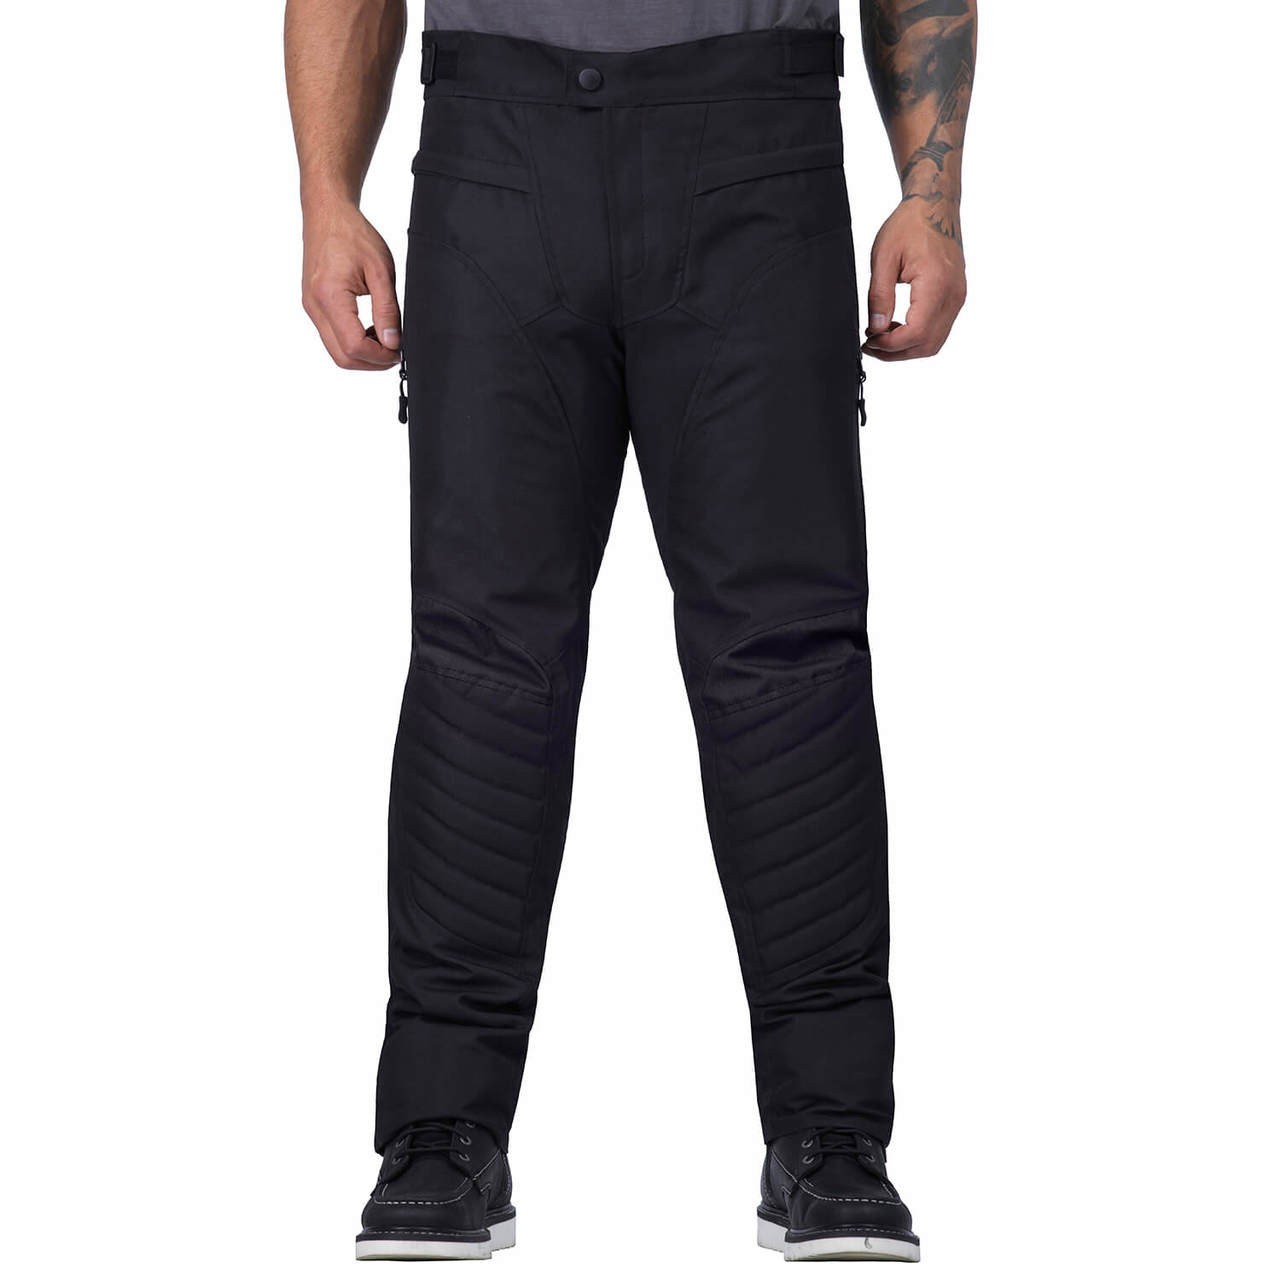 Mens Cordura Motorcycle Pants Trousers Ce armor Biker Thermal Liner Trouser 